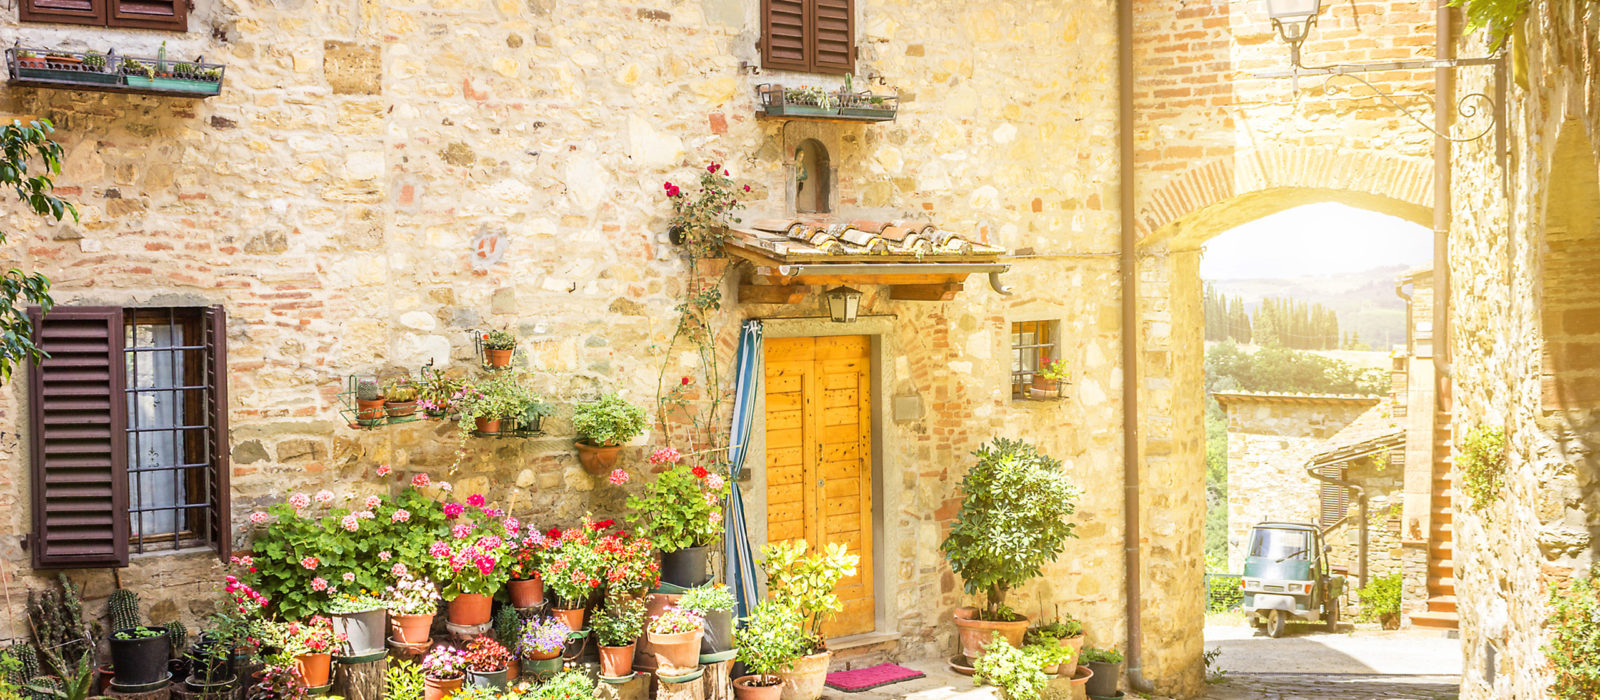 Village in the Chianti region of Tuscany, Italy